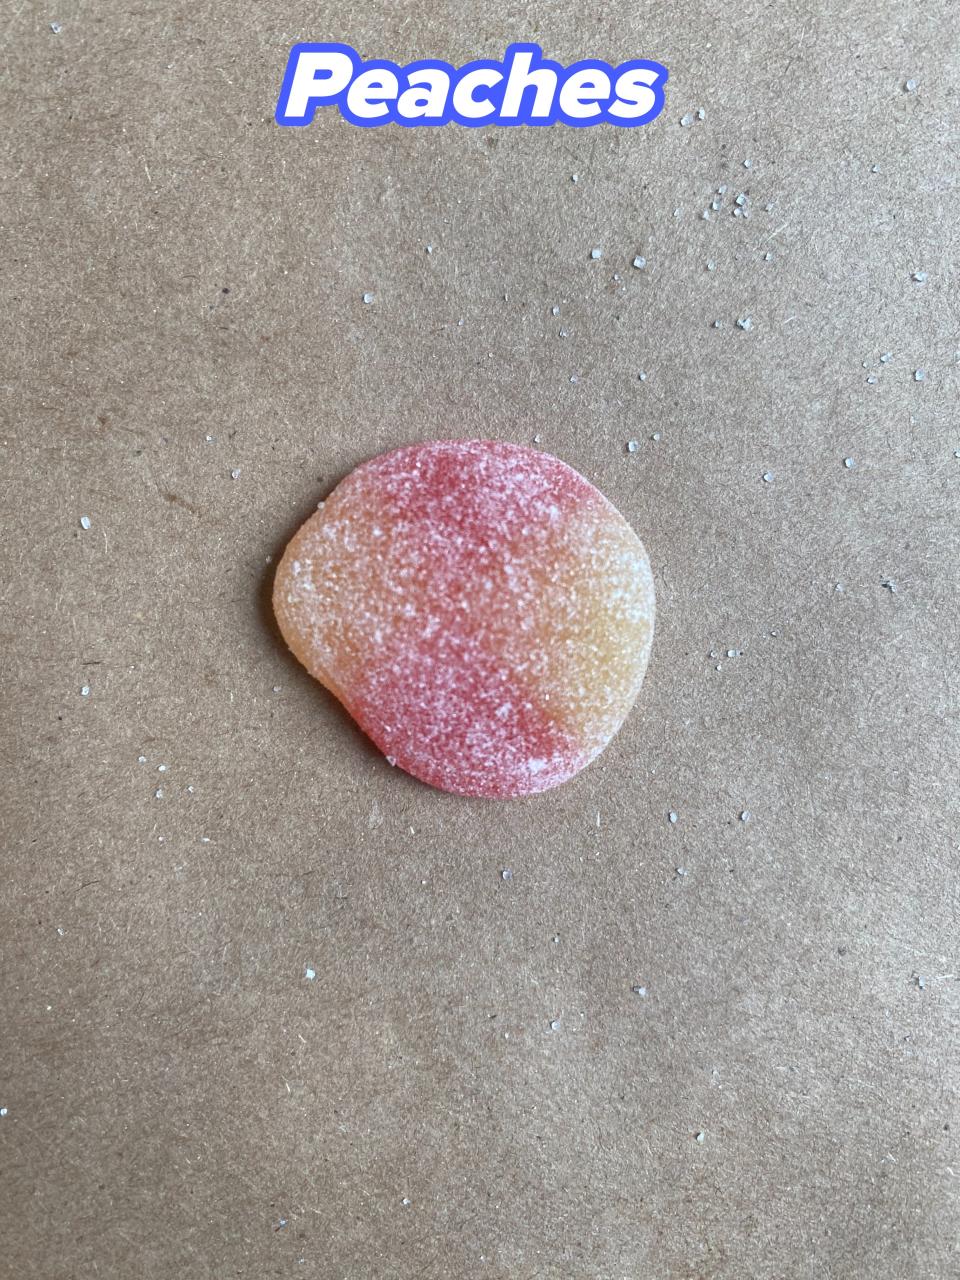 Single sugar-coated gummy candy on a plain surface